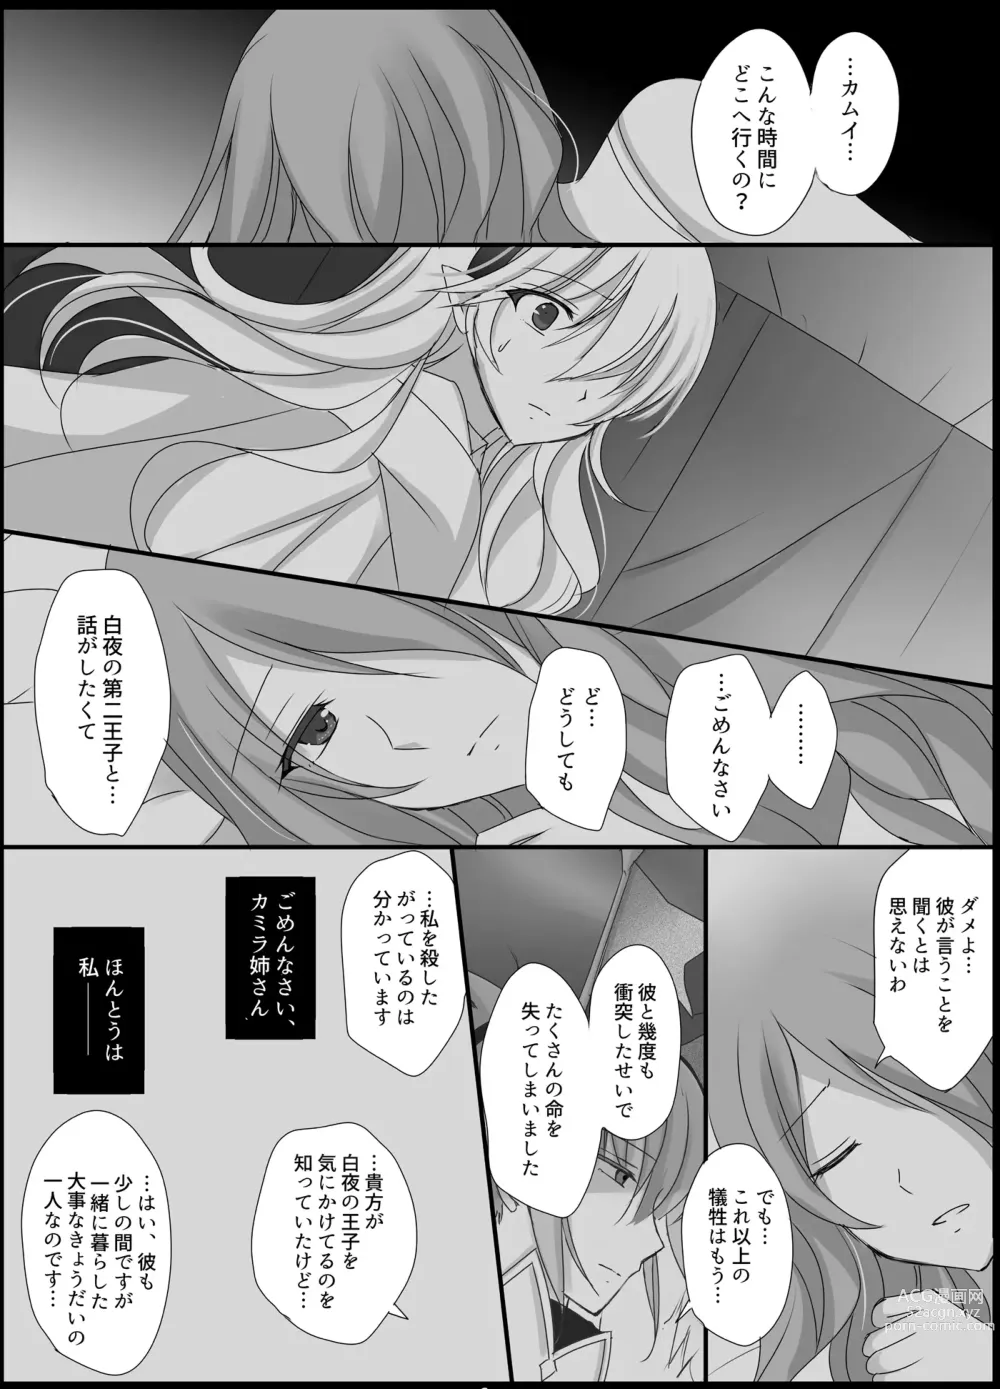 Page 6 of doujinshi Teion Yakedo